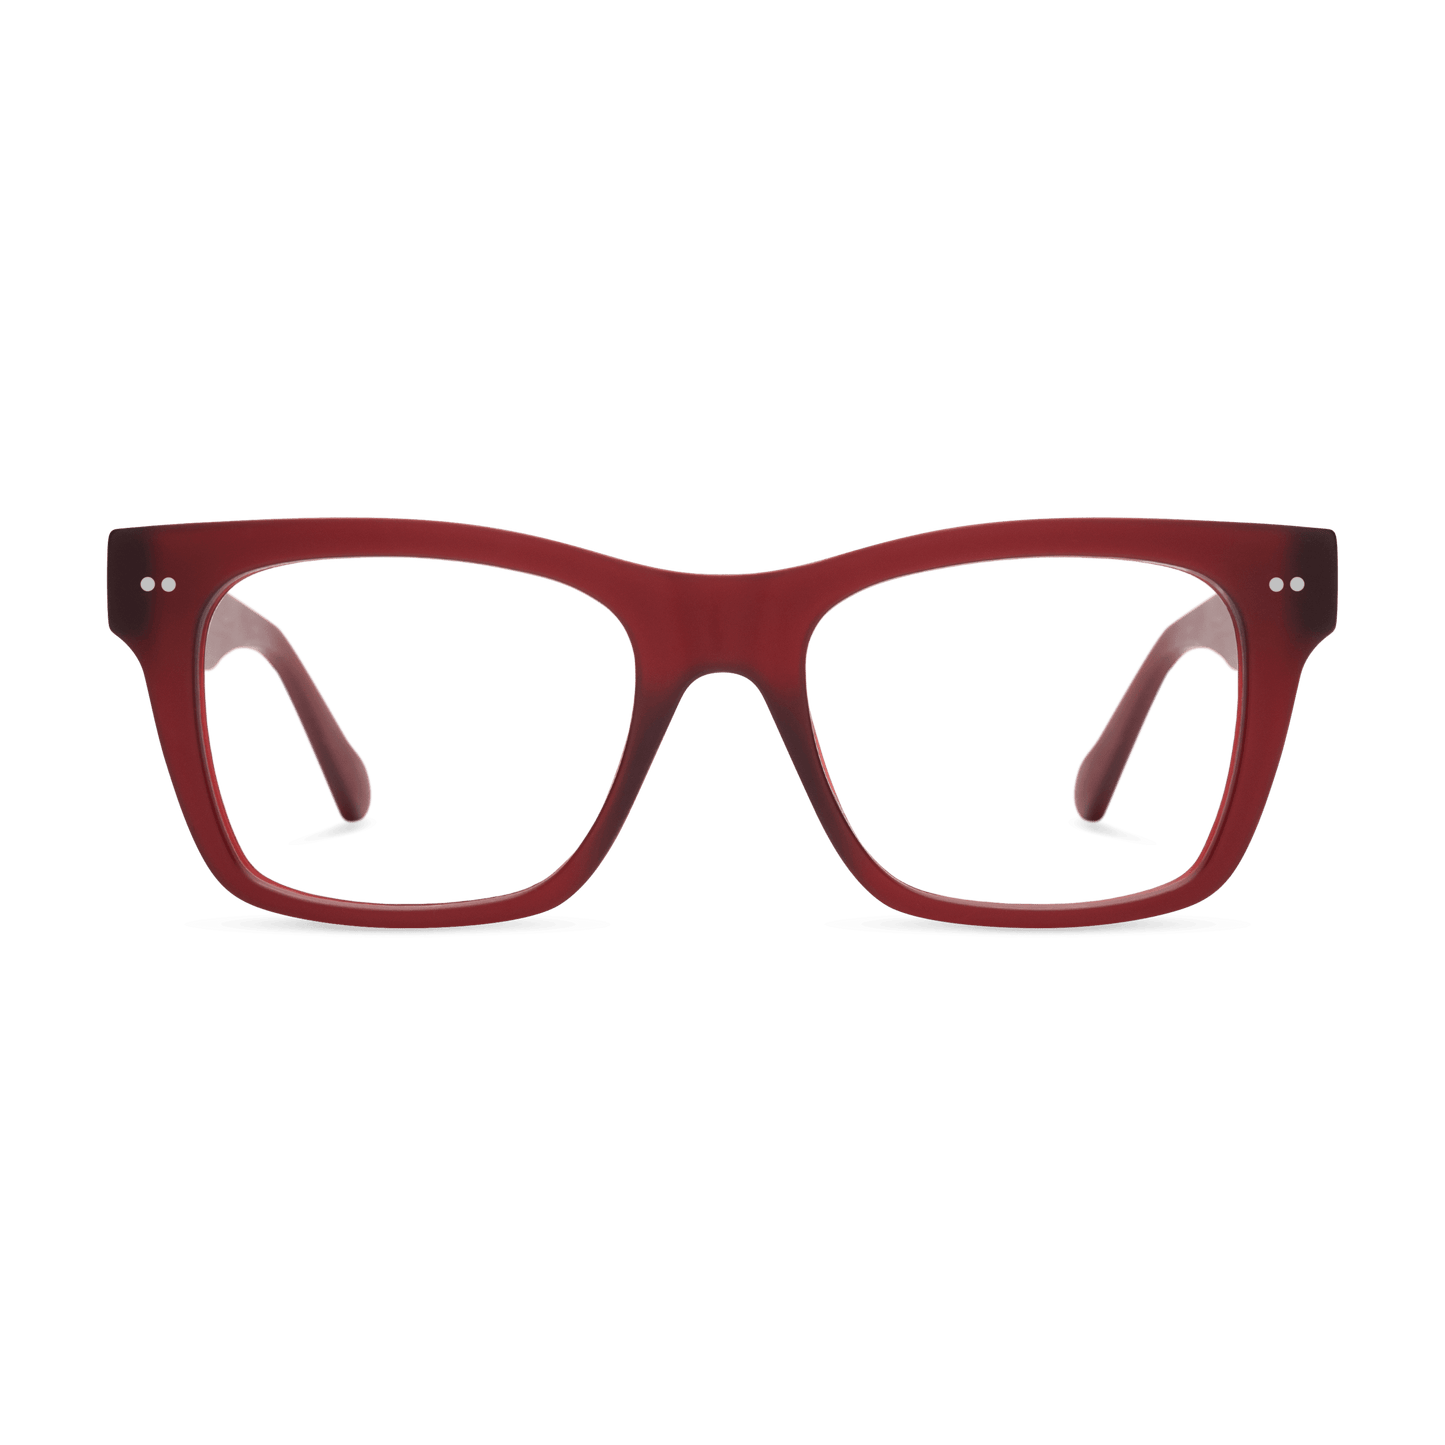 Cosmo Blue Light Eyewear Frames LOOK OPTIC (Crimson) +0.00 